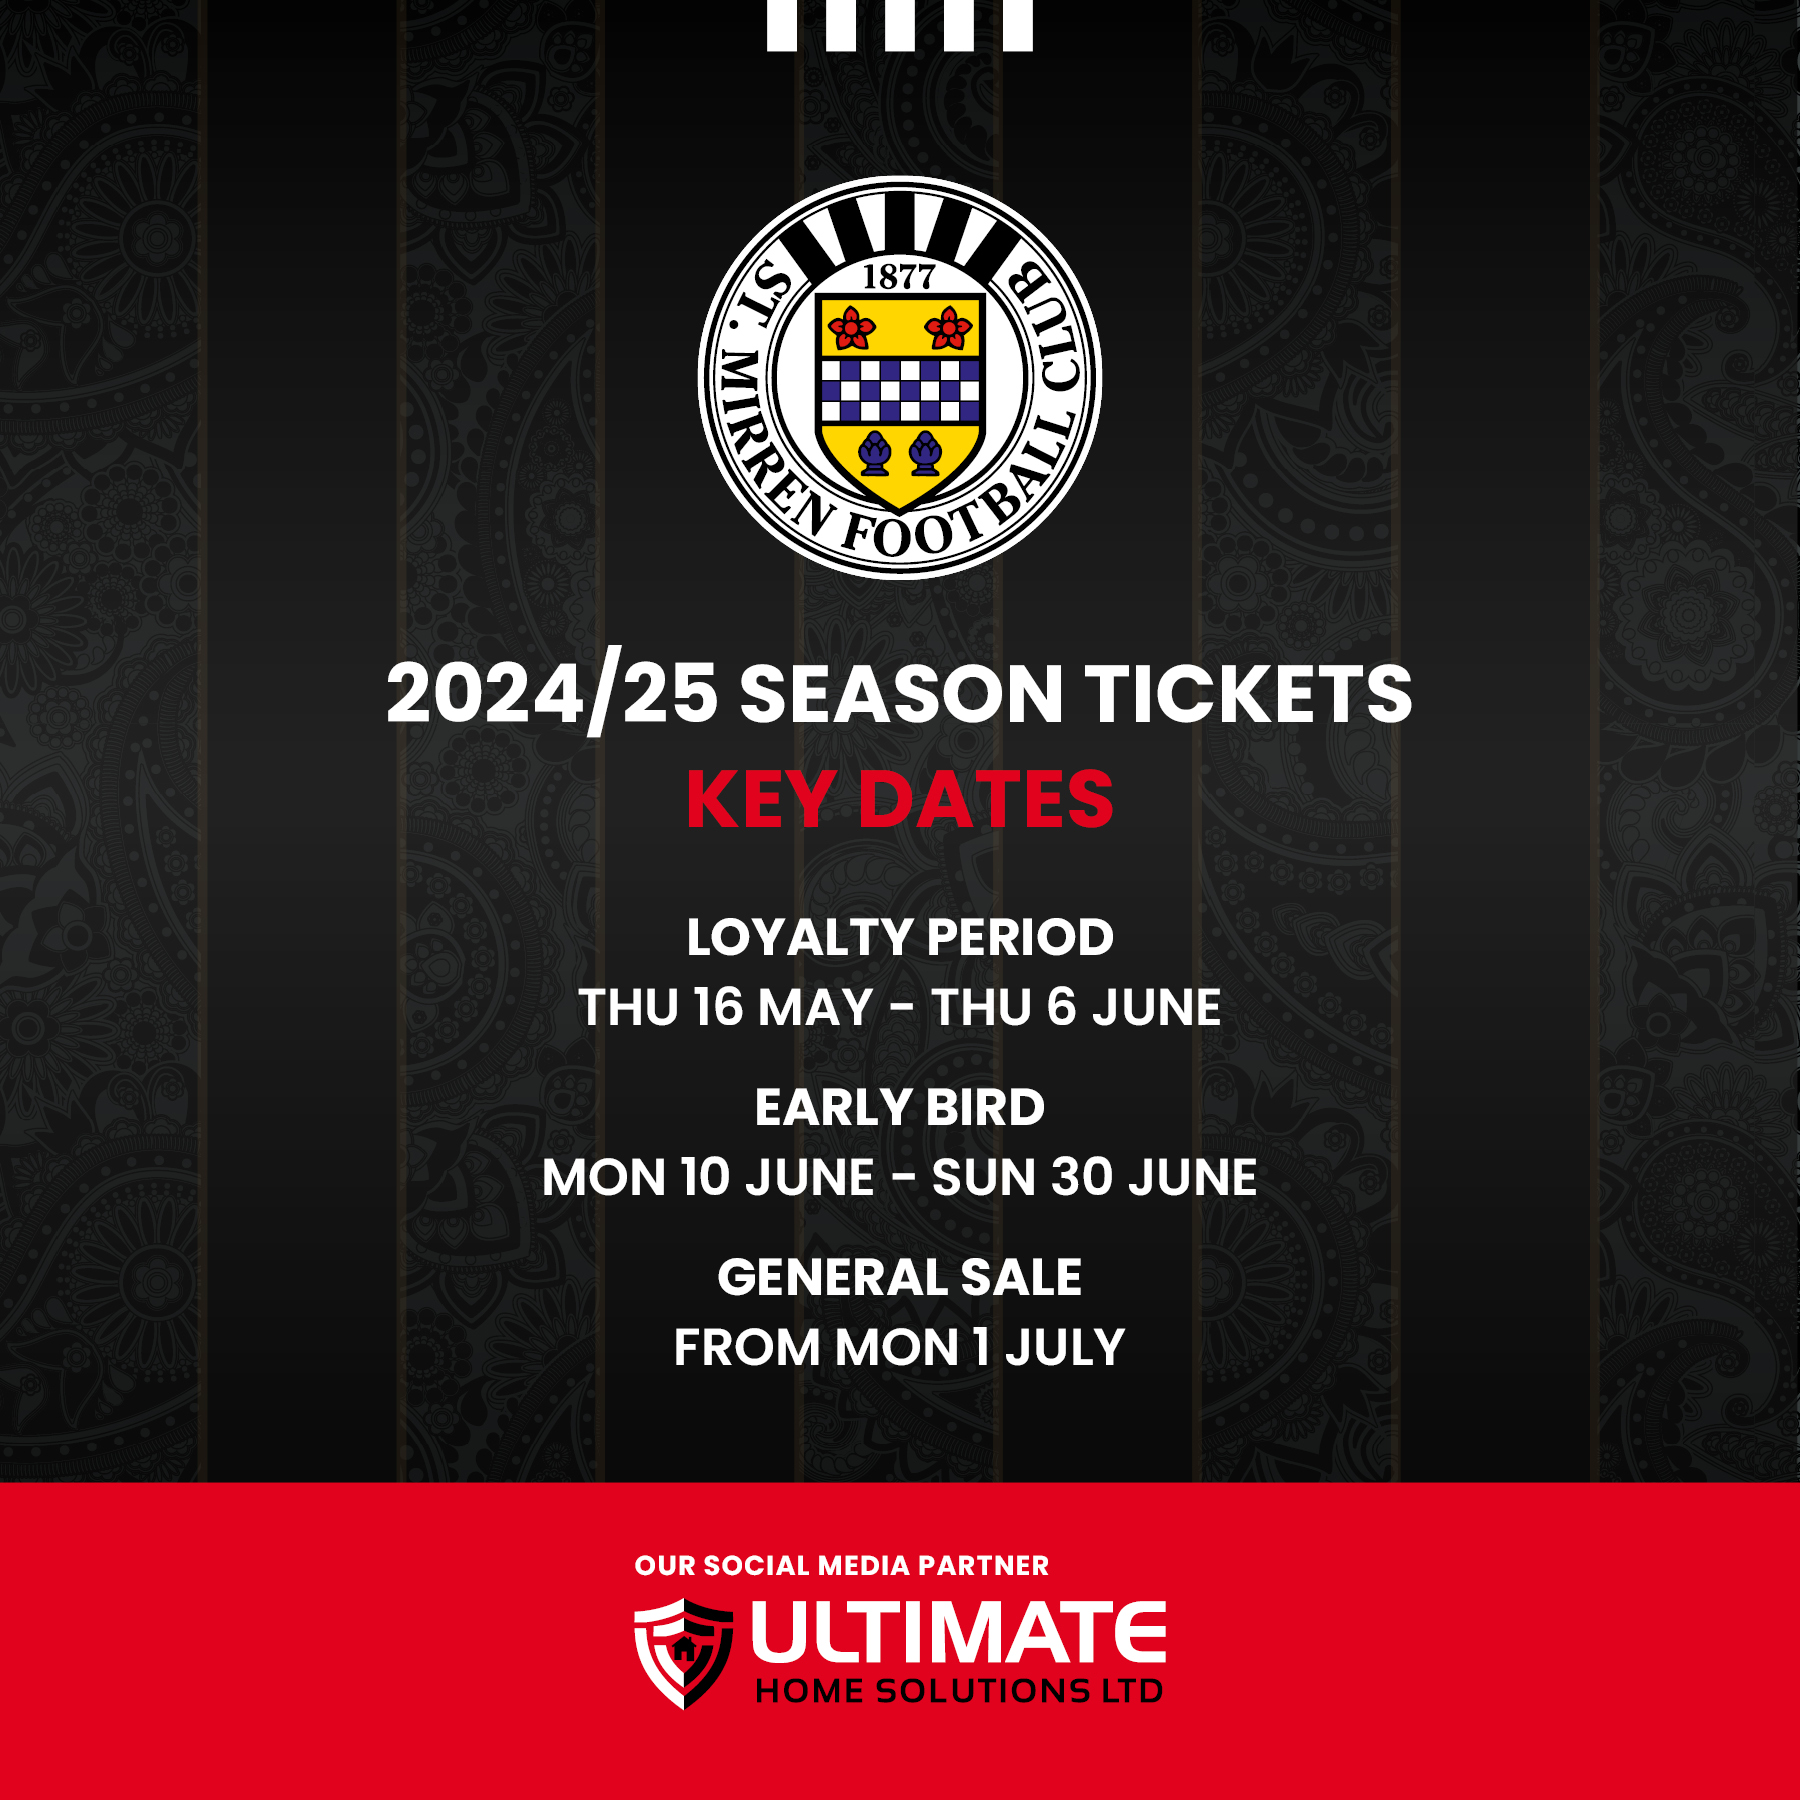 Key Dates for St Mirren Season Tickets 2024/25